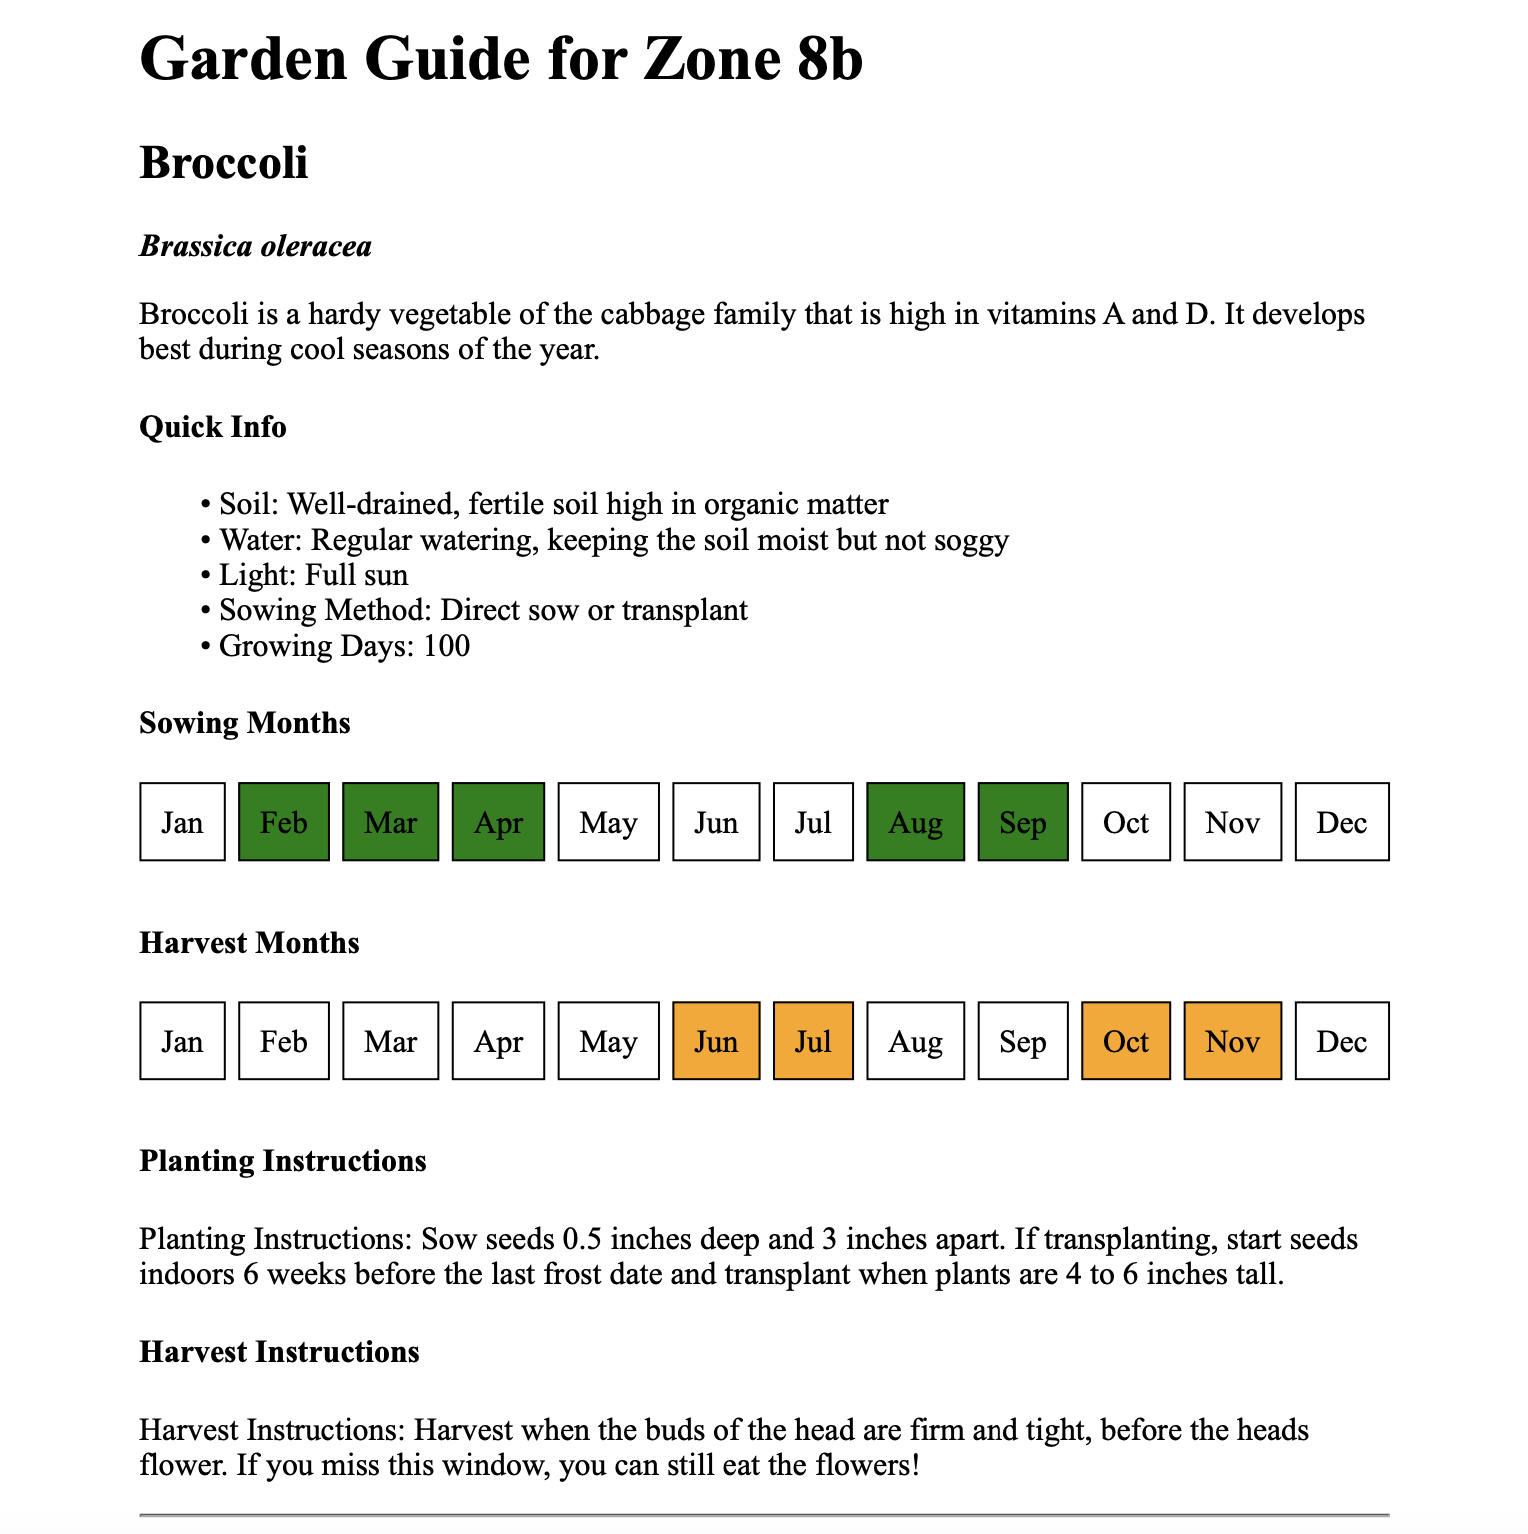 https://raw.githubusercontent.com/LetsEatLabs/Garden-Guide-Generator/main/examples/screenshot.png